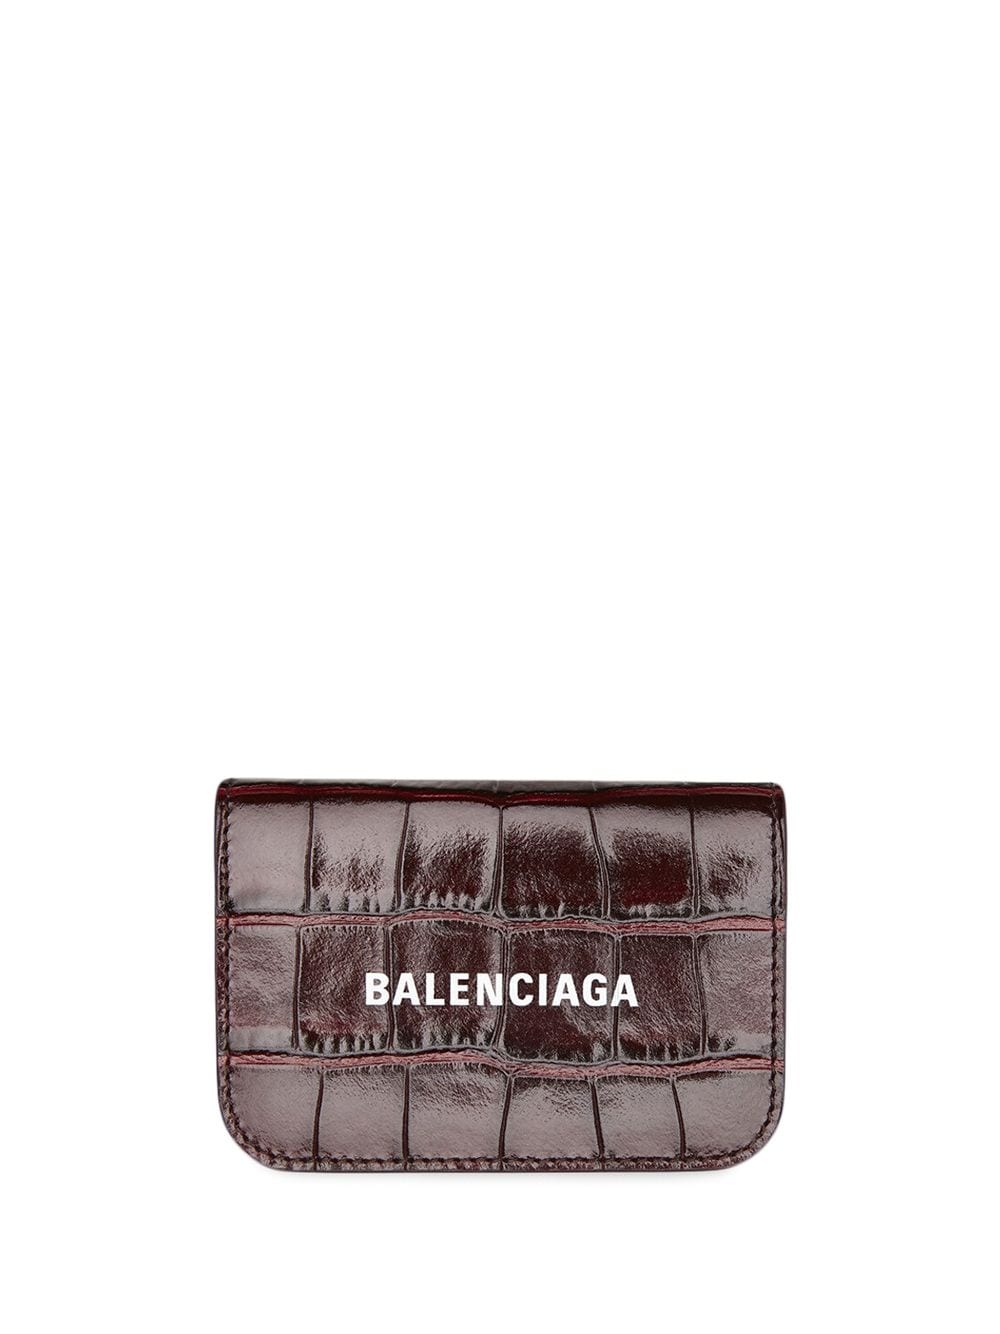 фото Balenciaga мини-кошелек cash